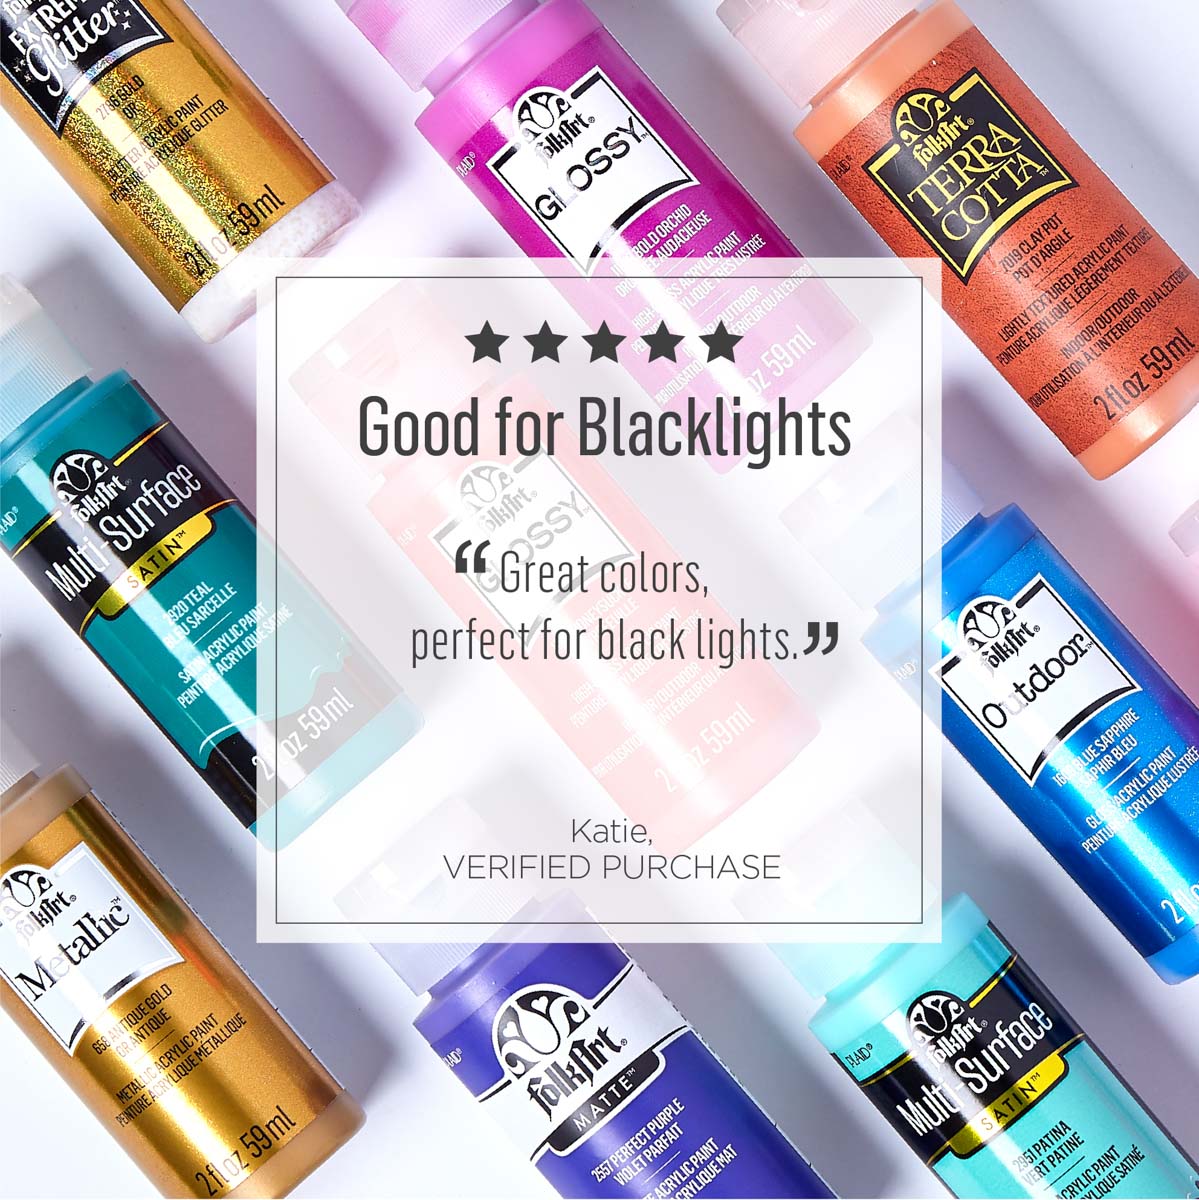 FolkArt ® Neon Blacklight™ Colors -  Pink, 2 oz. - 2850